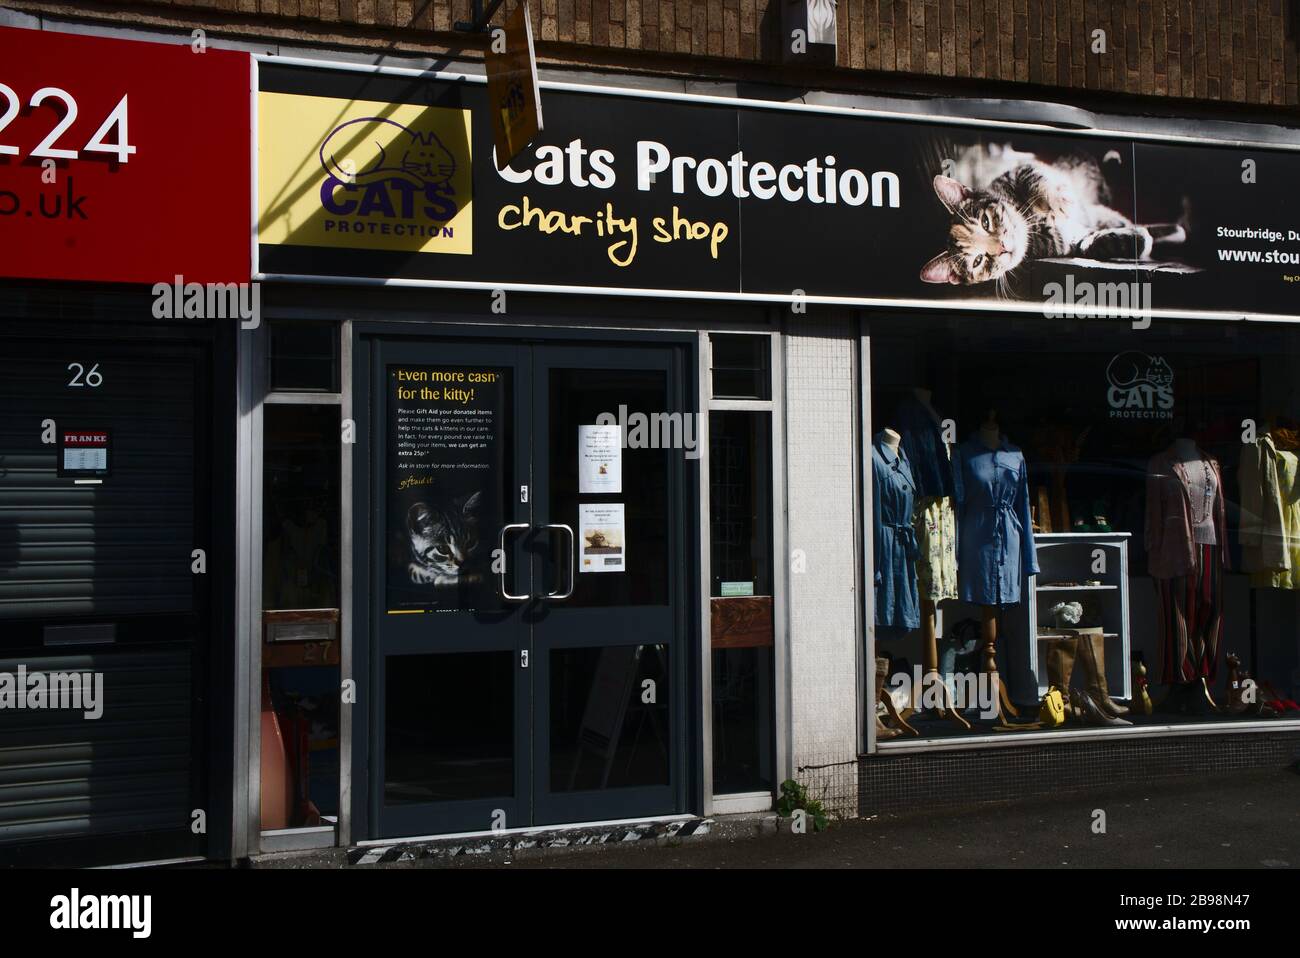 CAT Protection Charity Shop im Vorderteil. Geschlossen wegen Coronavirus Pandemie. Stourbridge. West Midlands. GROSSBRITANNIEN Stockfoto